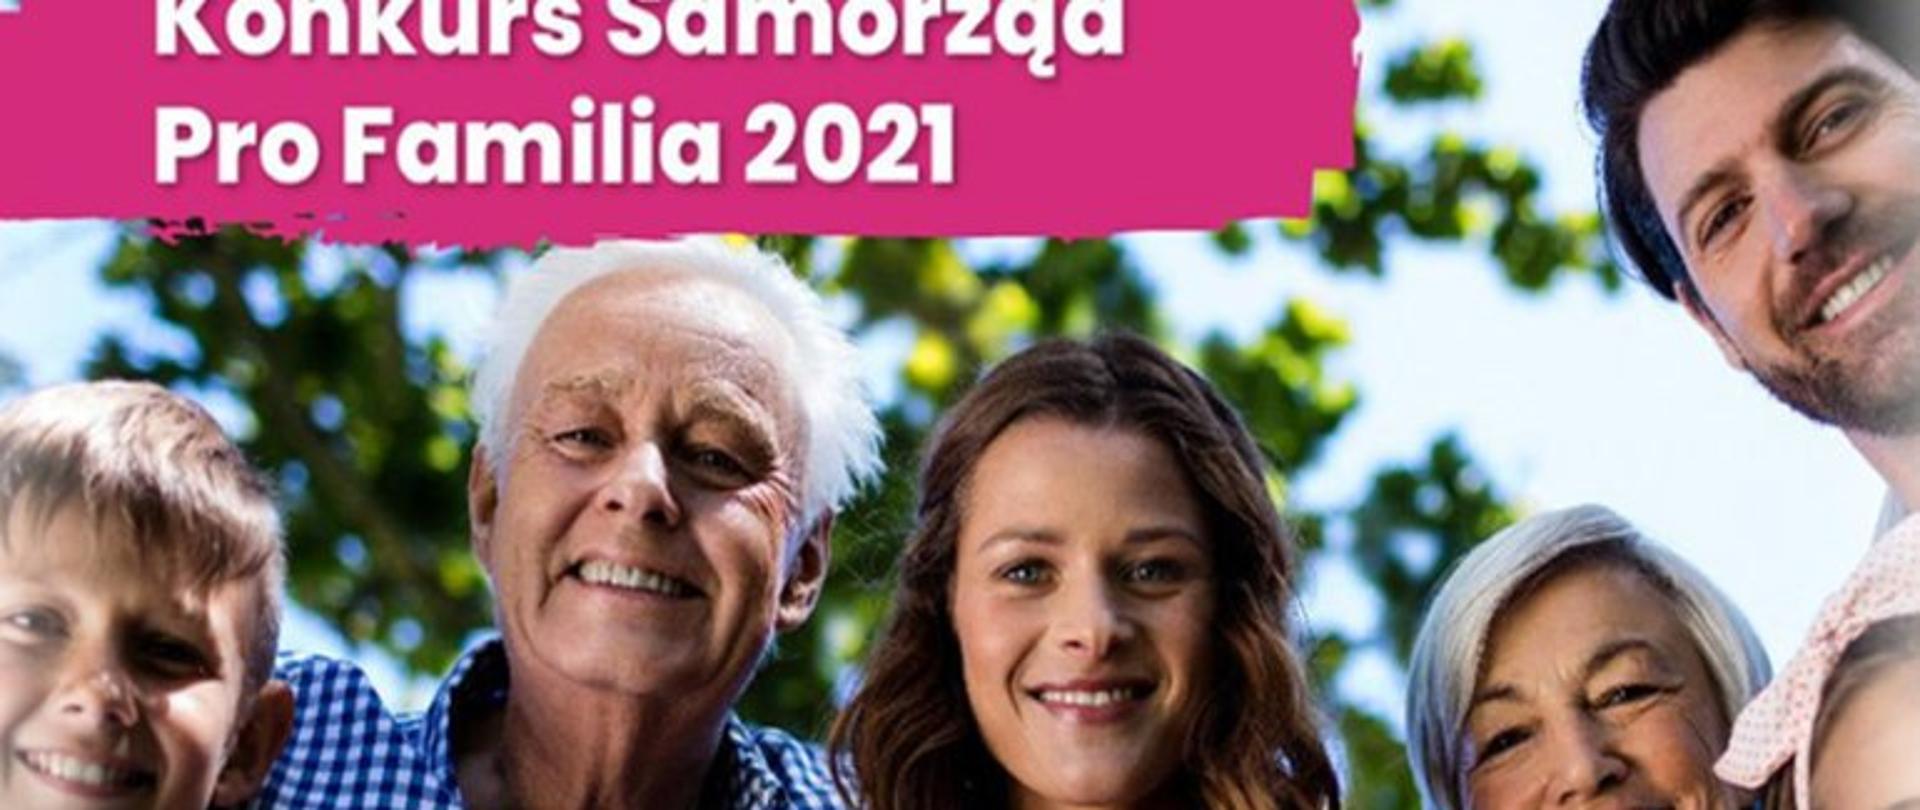 Konkurs "Samorząd Pro Familia 2021"